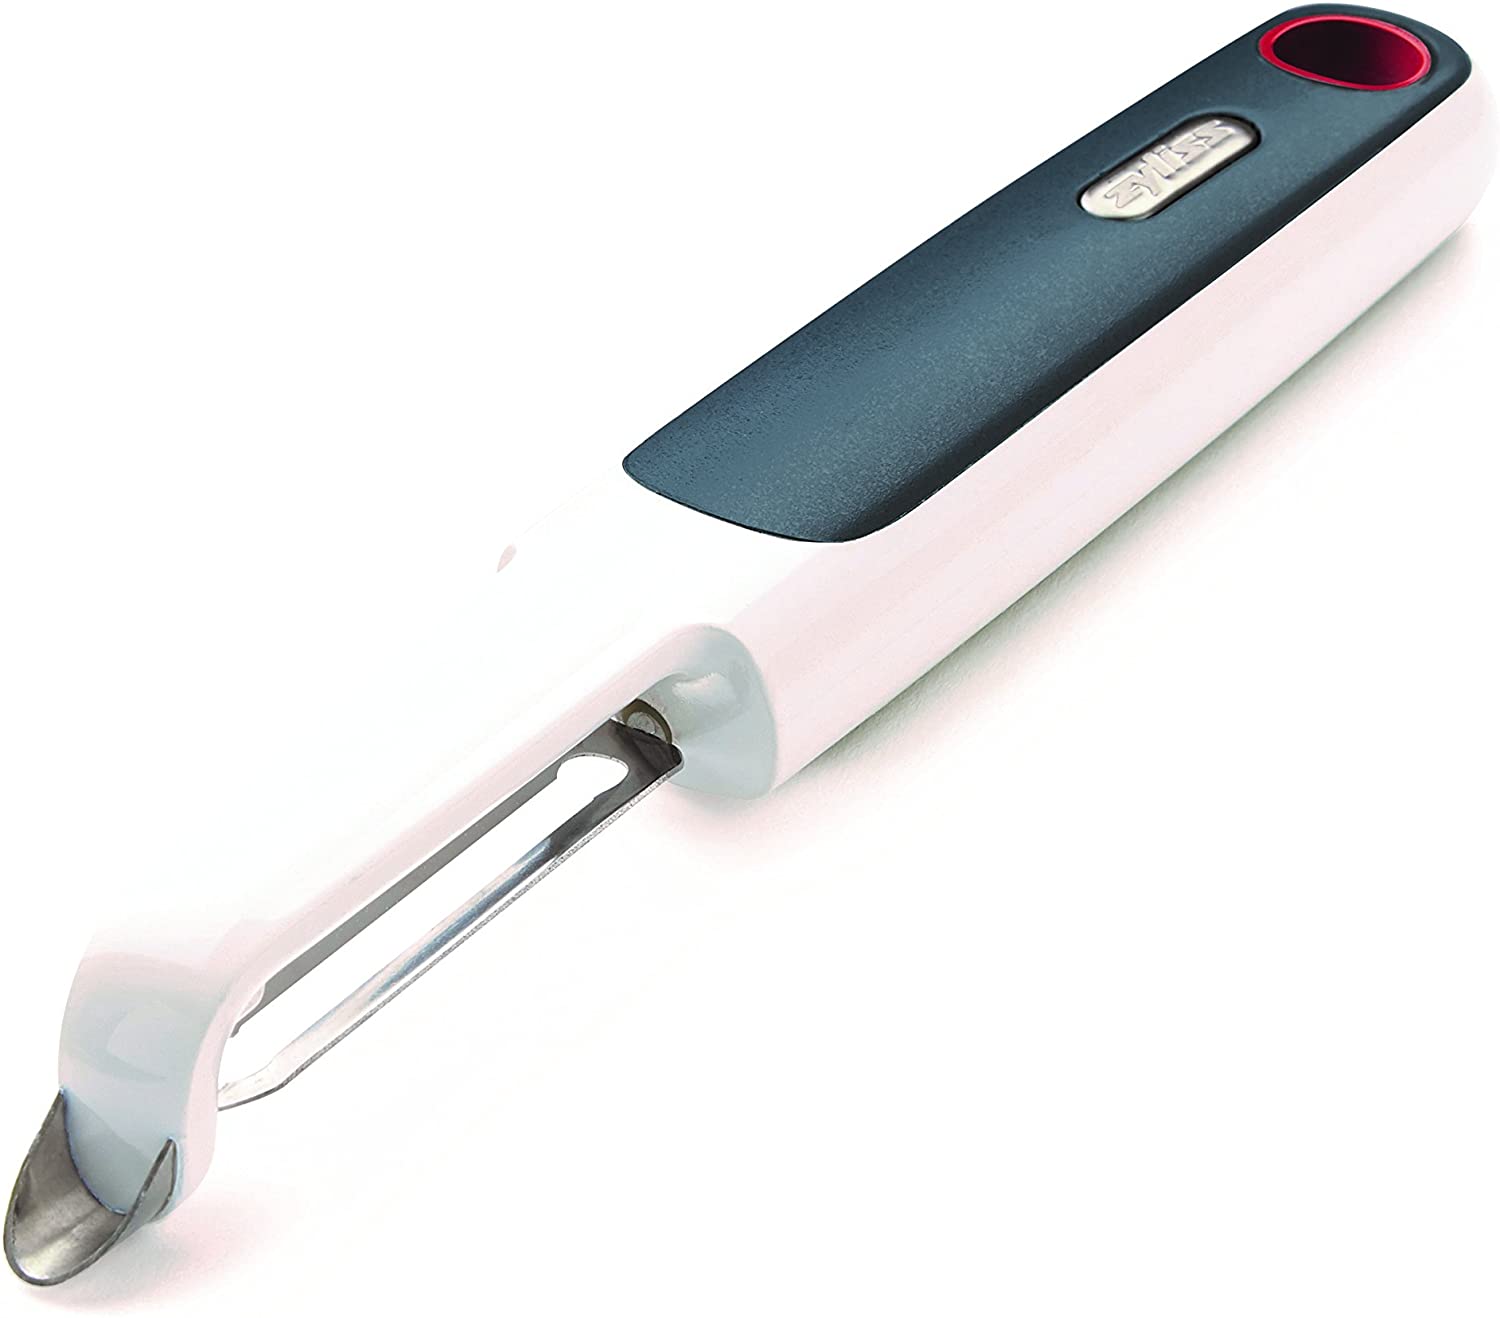 Zyliss Pendulum peeler, vegetable peeler, peeler, sturdy peeler with double-sided stainless steel blade and eye cutter